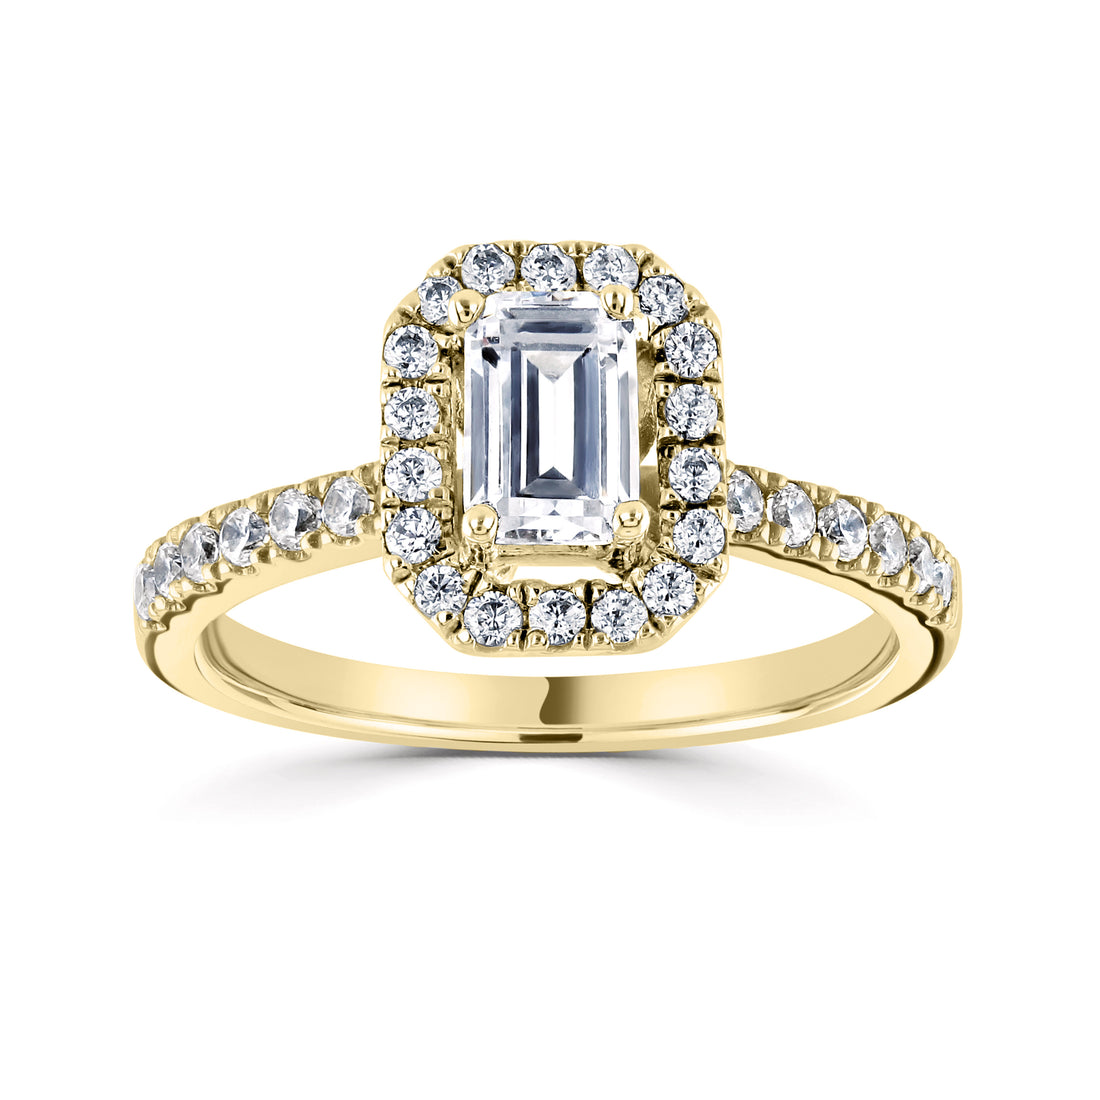 18CT Yellow Gold Emerald Cut Diamond Halo Ring with Diamond Shoulders